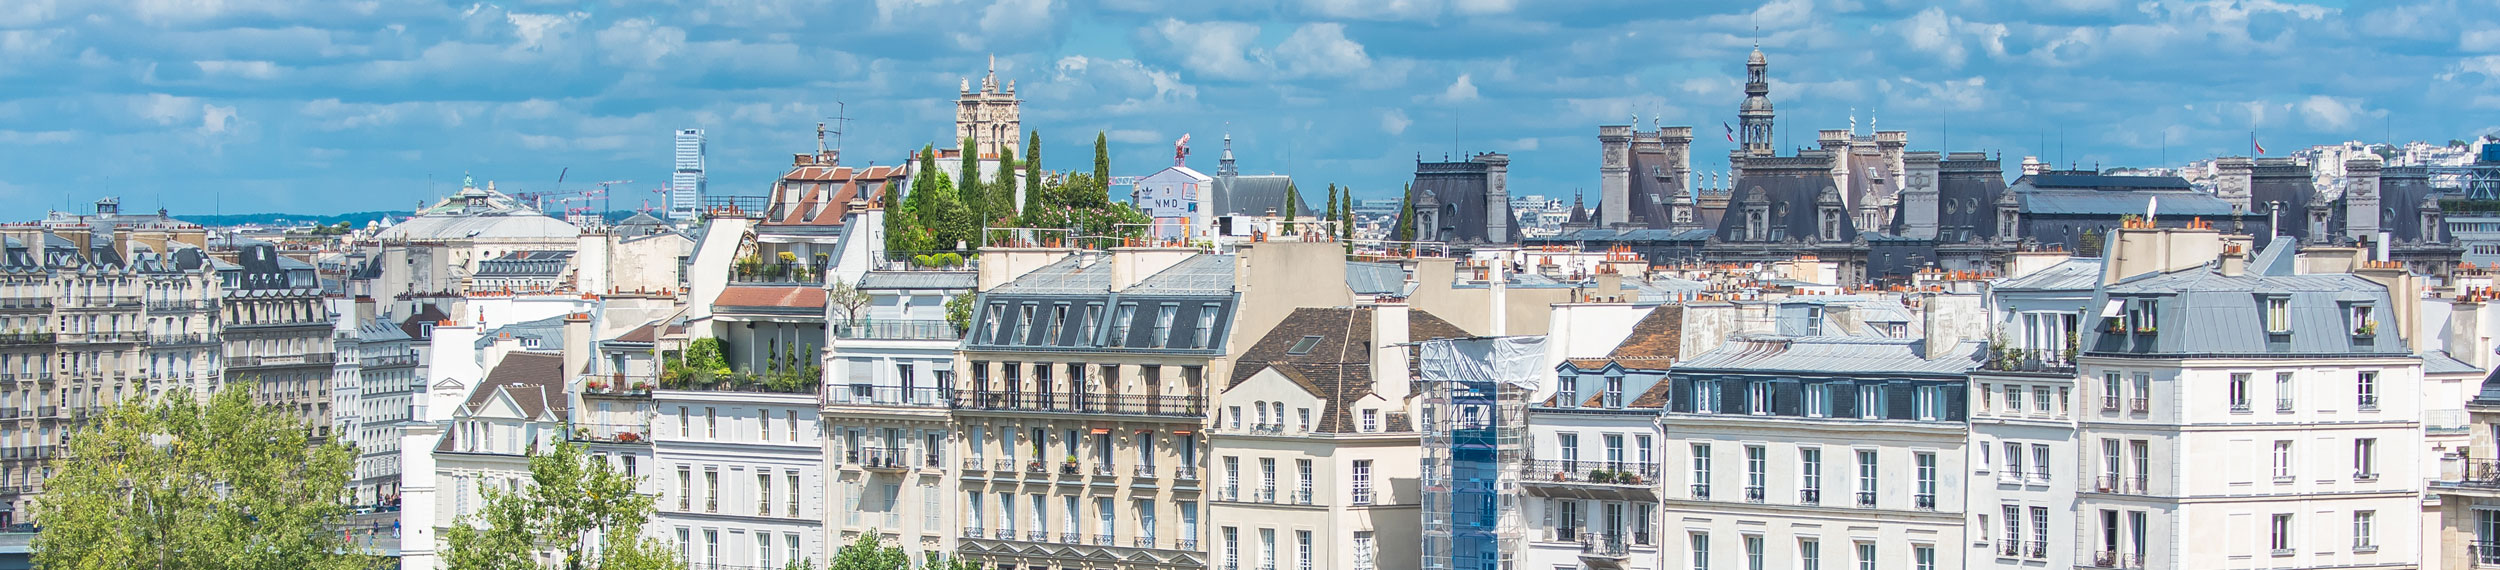 A landscape shot of residential buildings in Paris, France